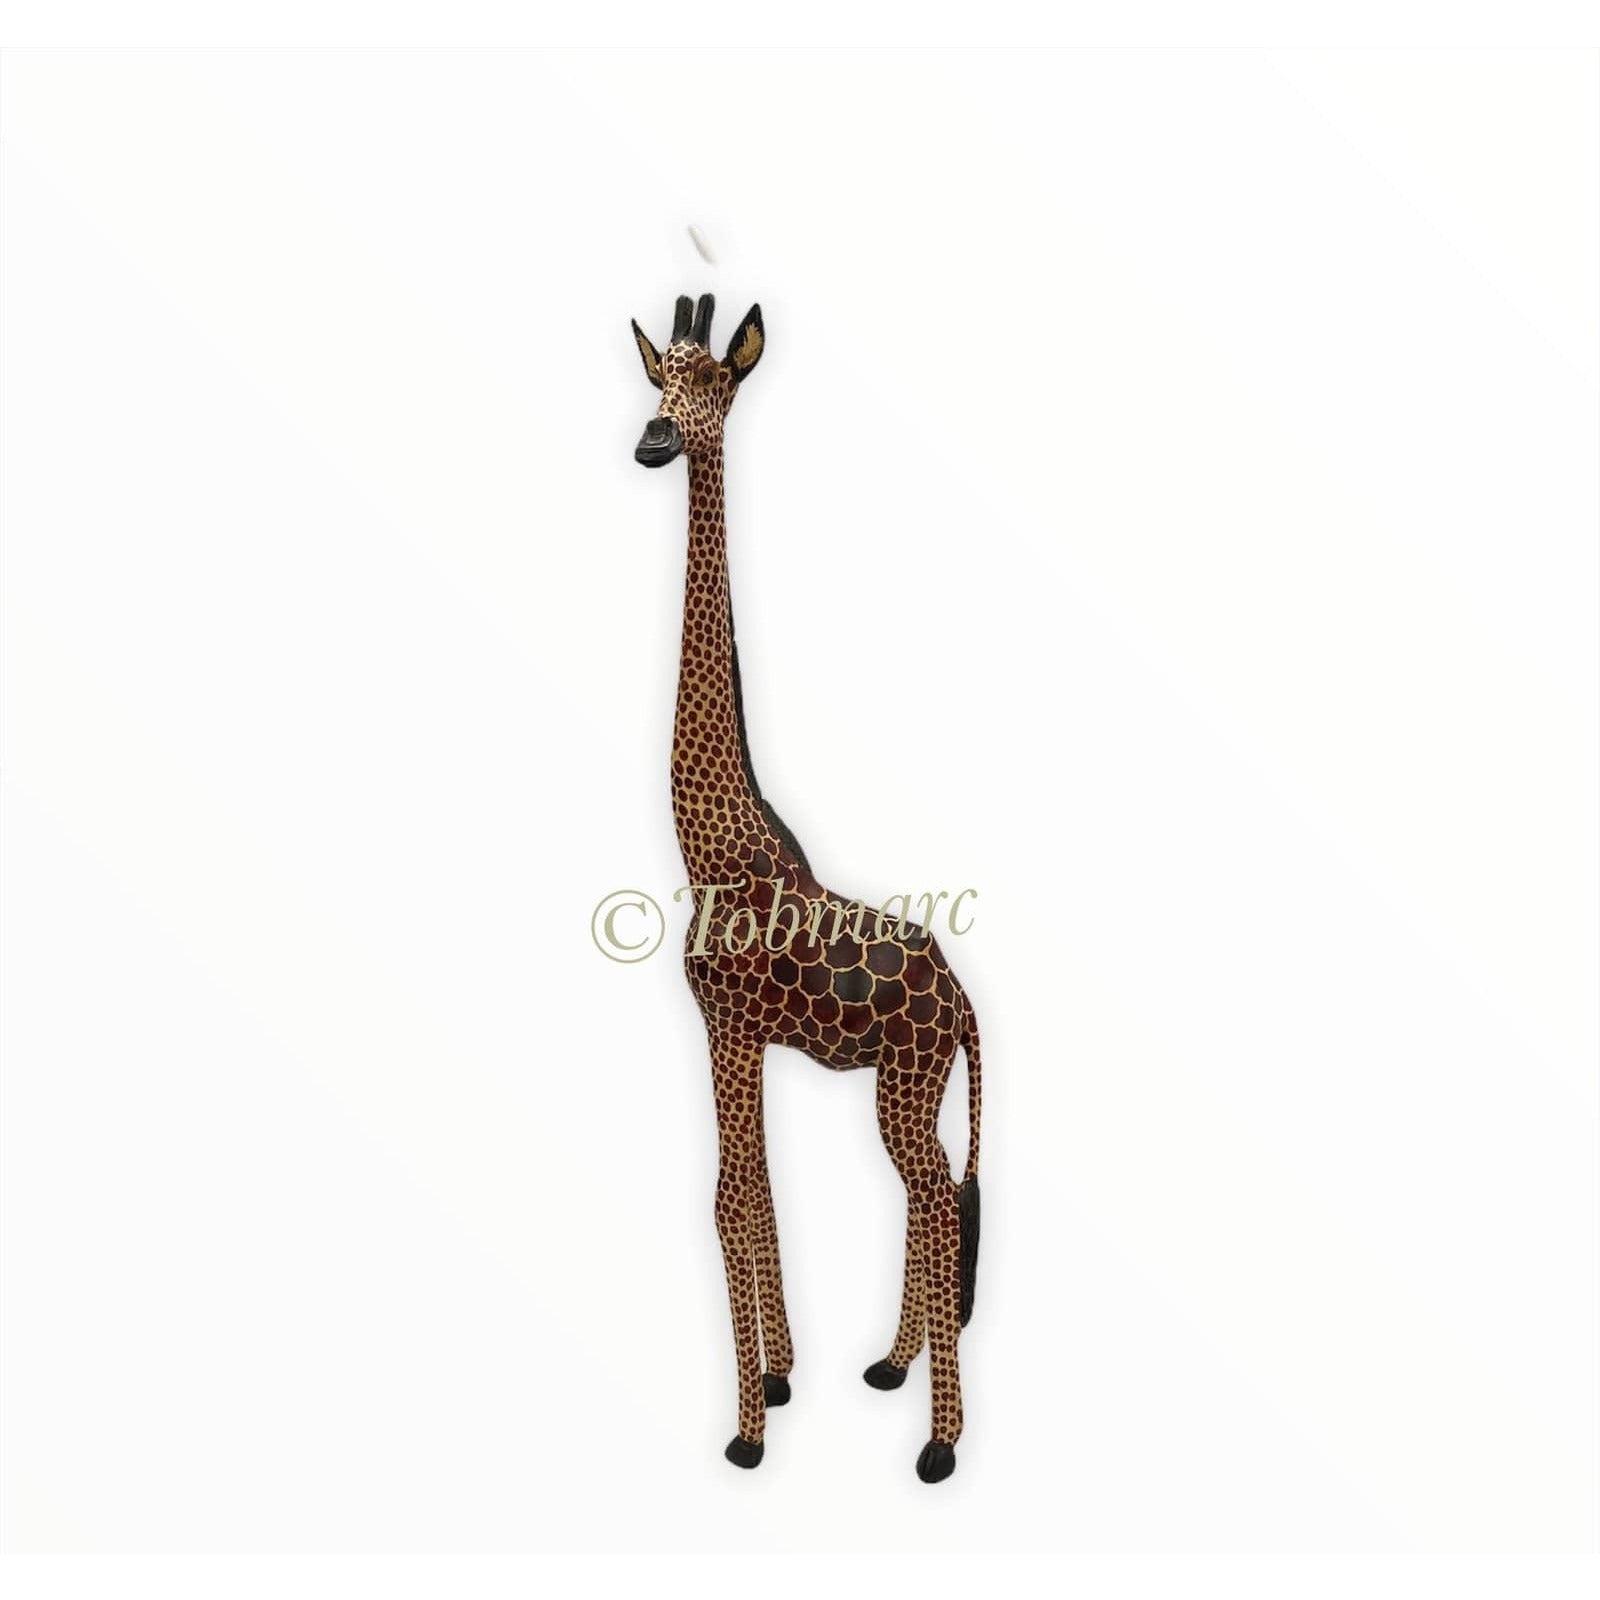 Tobmarc Home Decor & Gifts  24" Wooden Giraffe sculpture, Wooden giraffe Home decor, African Wooden Giraffe Statue